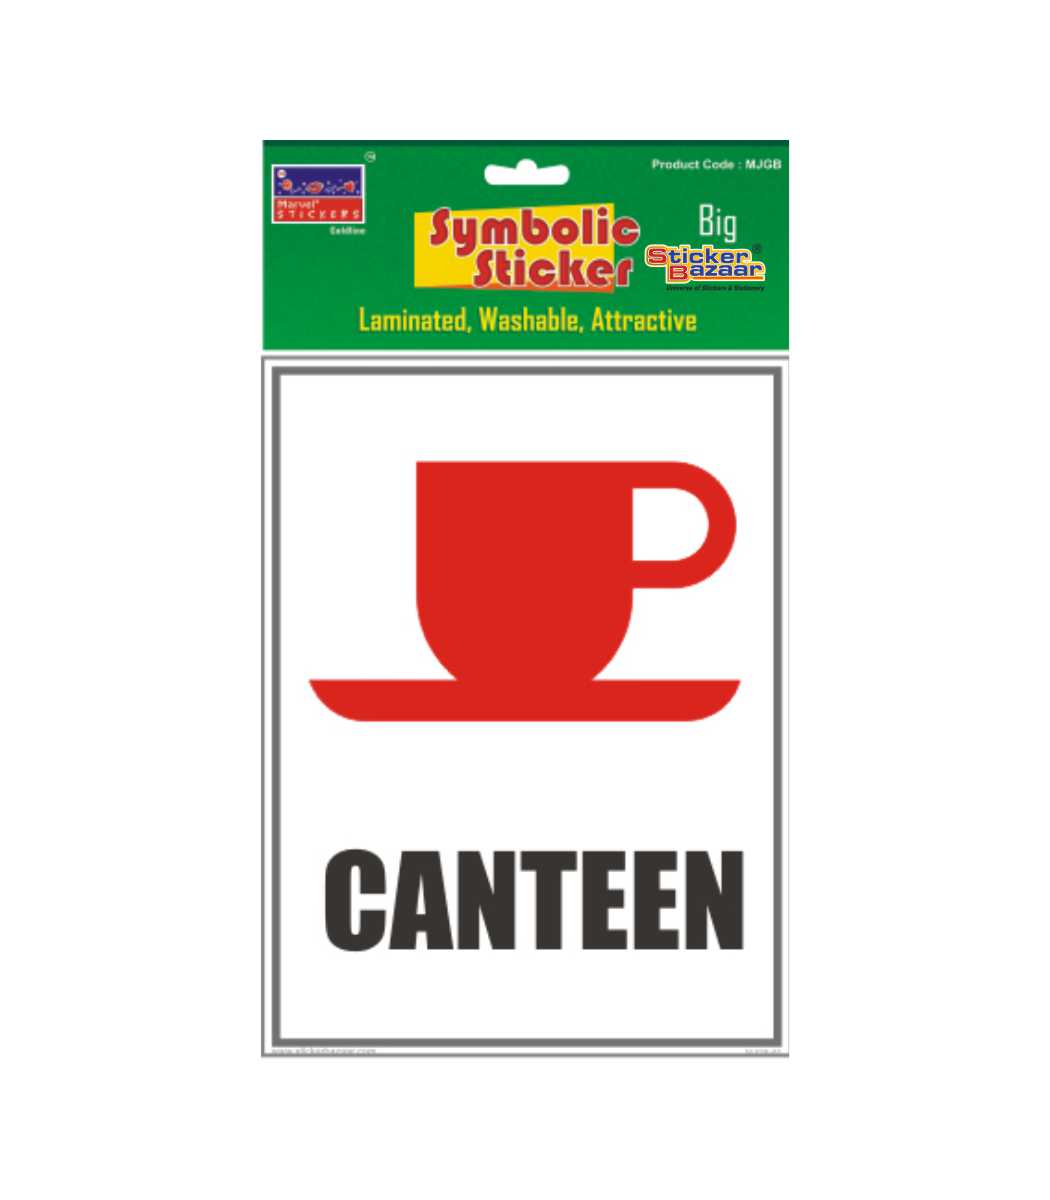 Canteen Big Symbolic Sticker